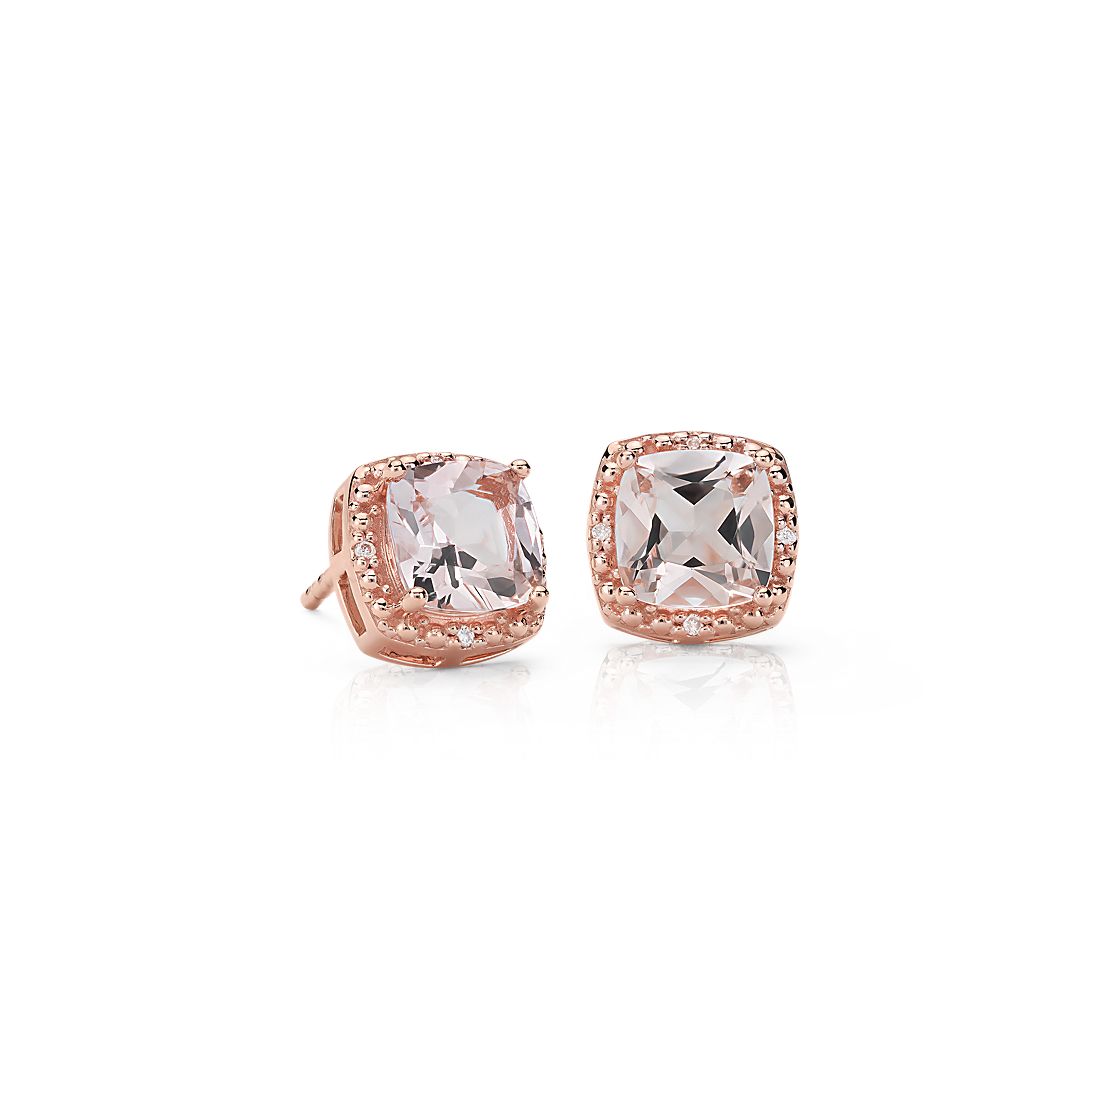 Morganite and diamond stud earrings